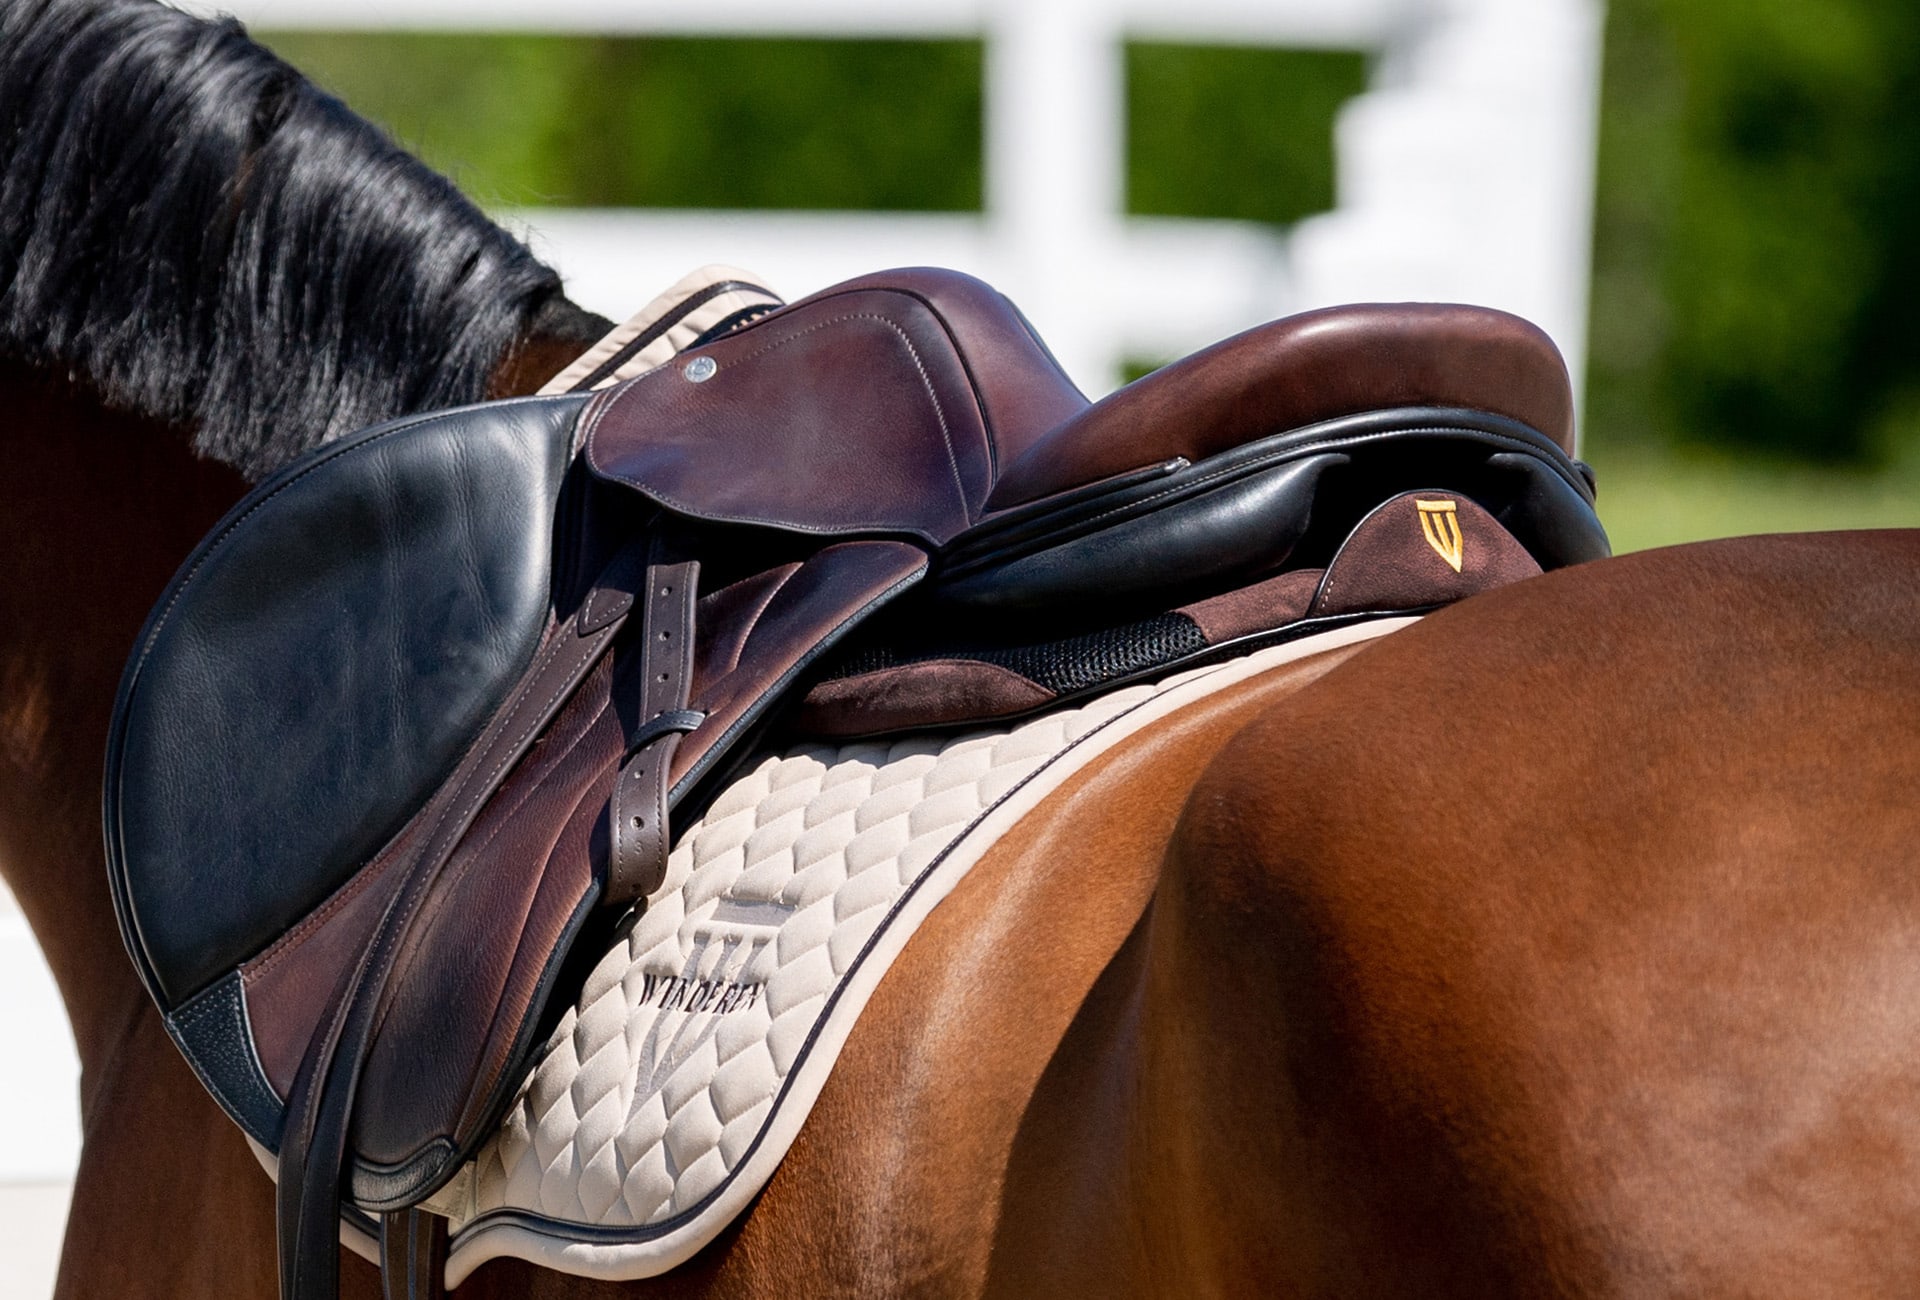 Saddle pads for horses  manufacturer and equestrian shop Winderen